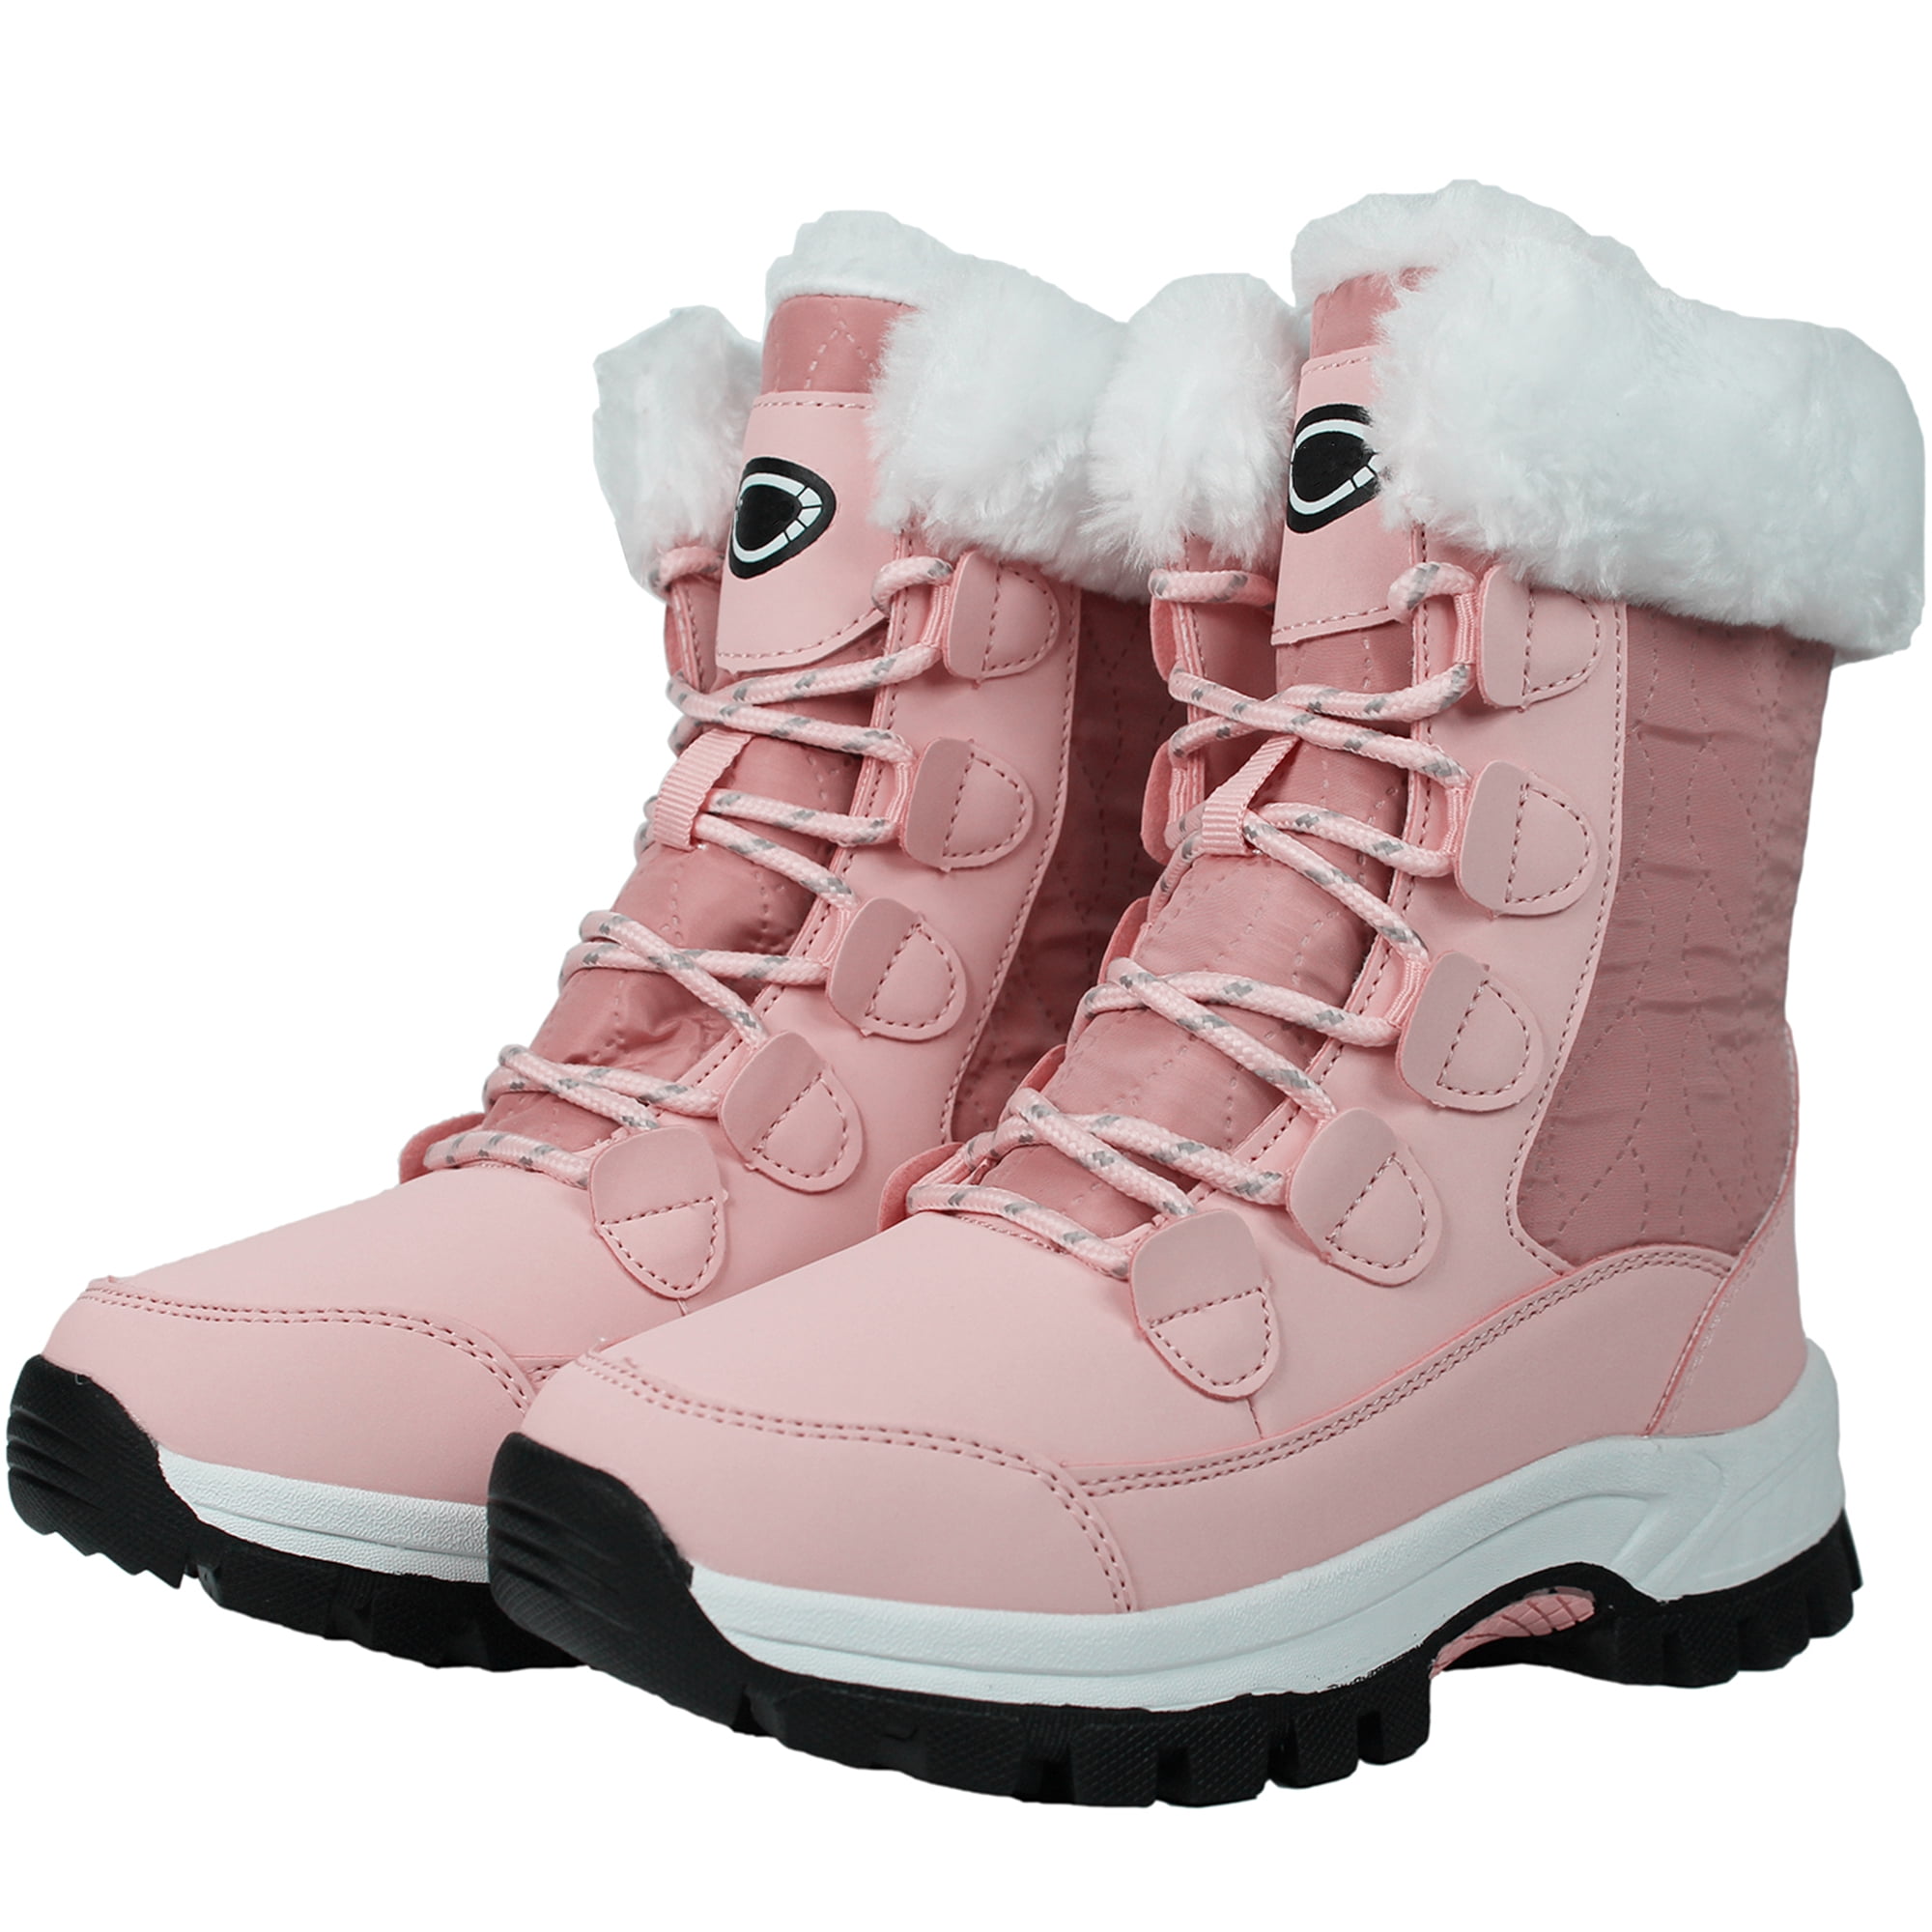 Tanleewa Waterproof Womens Snow Boots Mid-Calf Winter Boots 6 Female ...